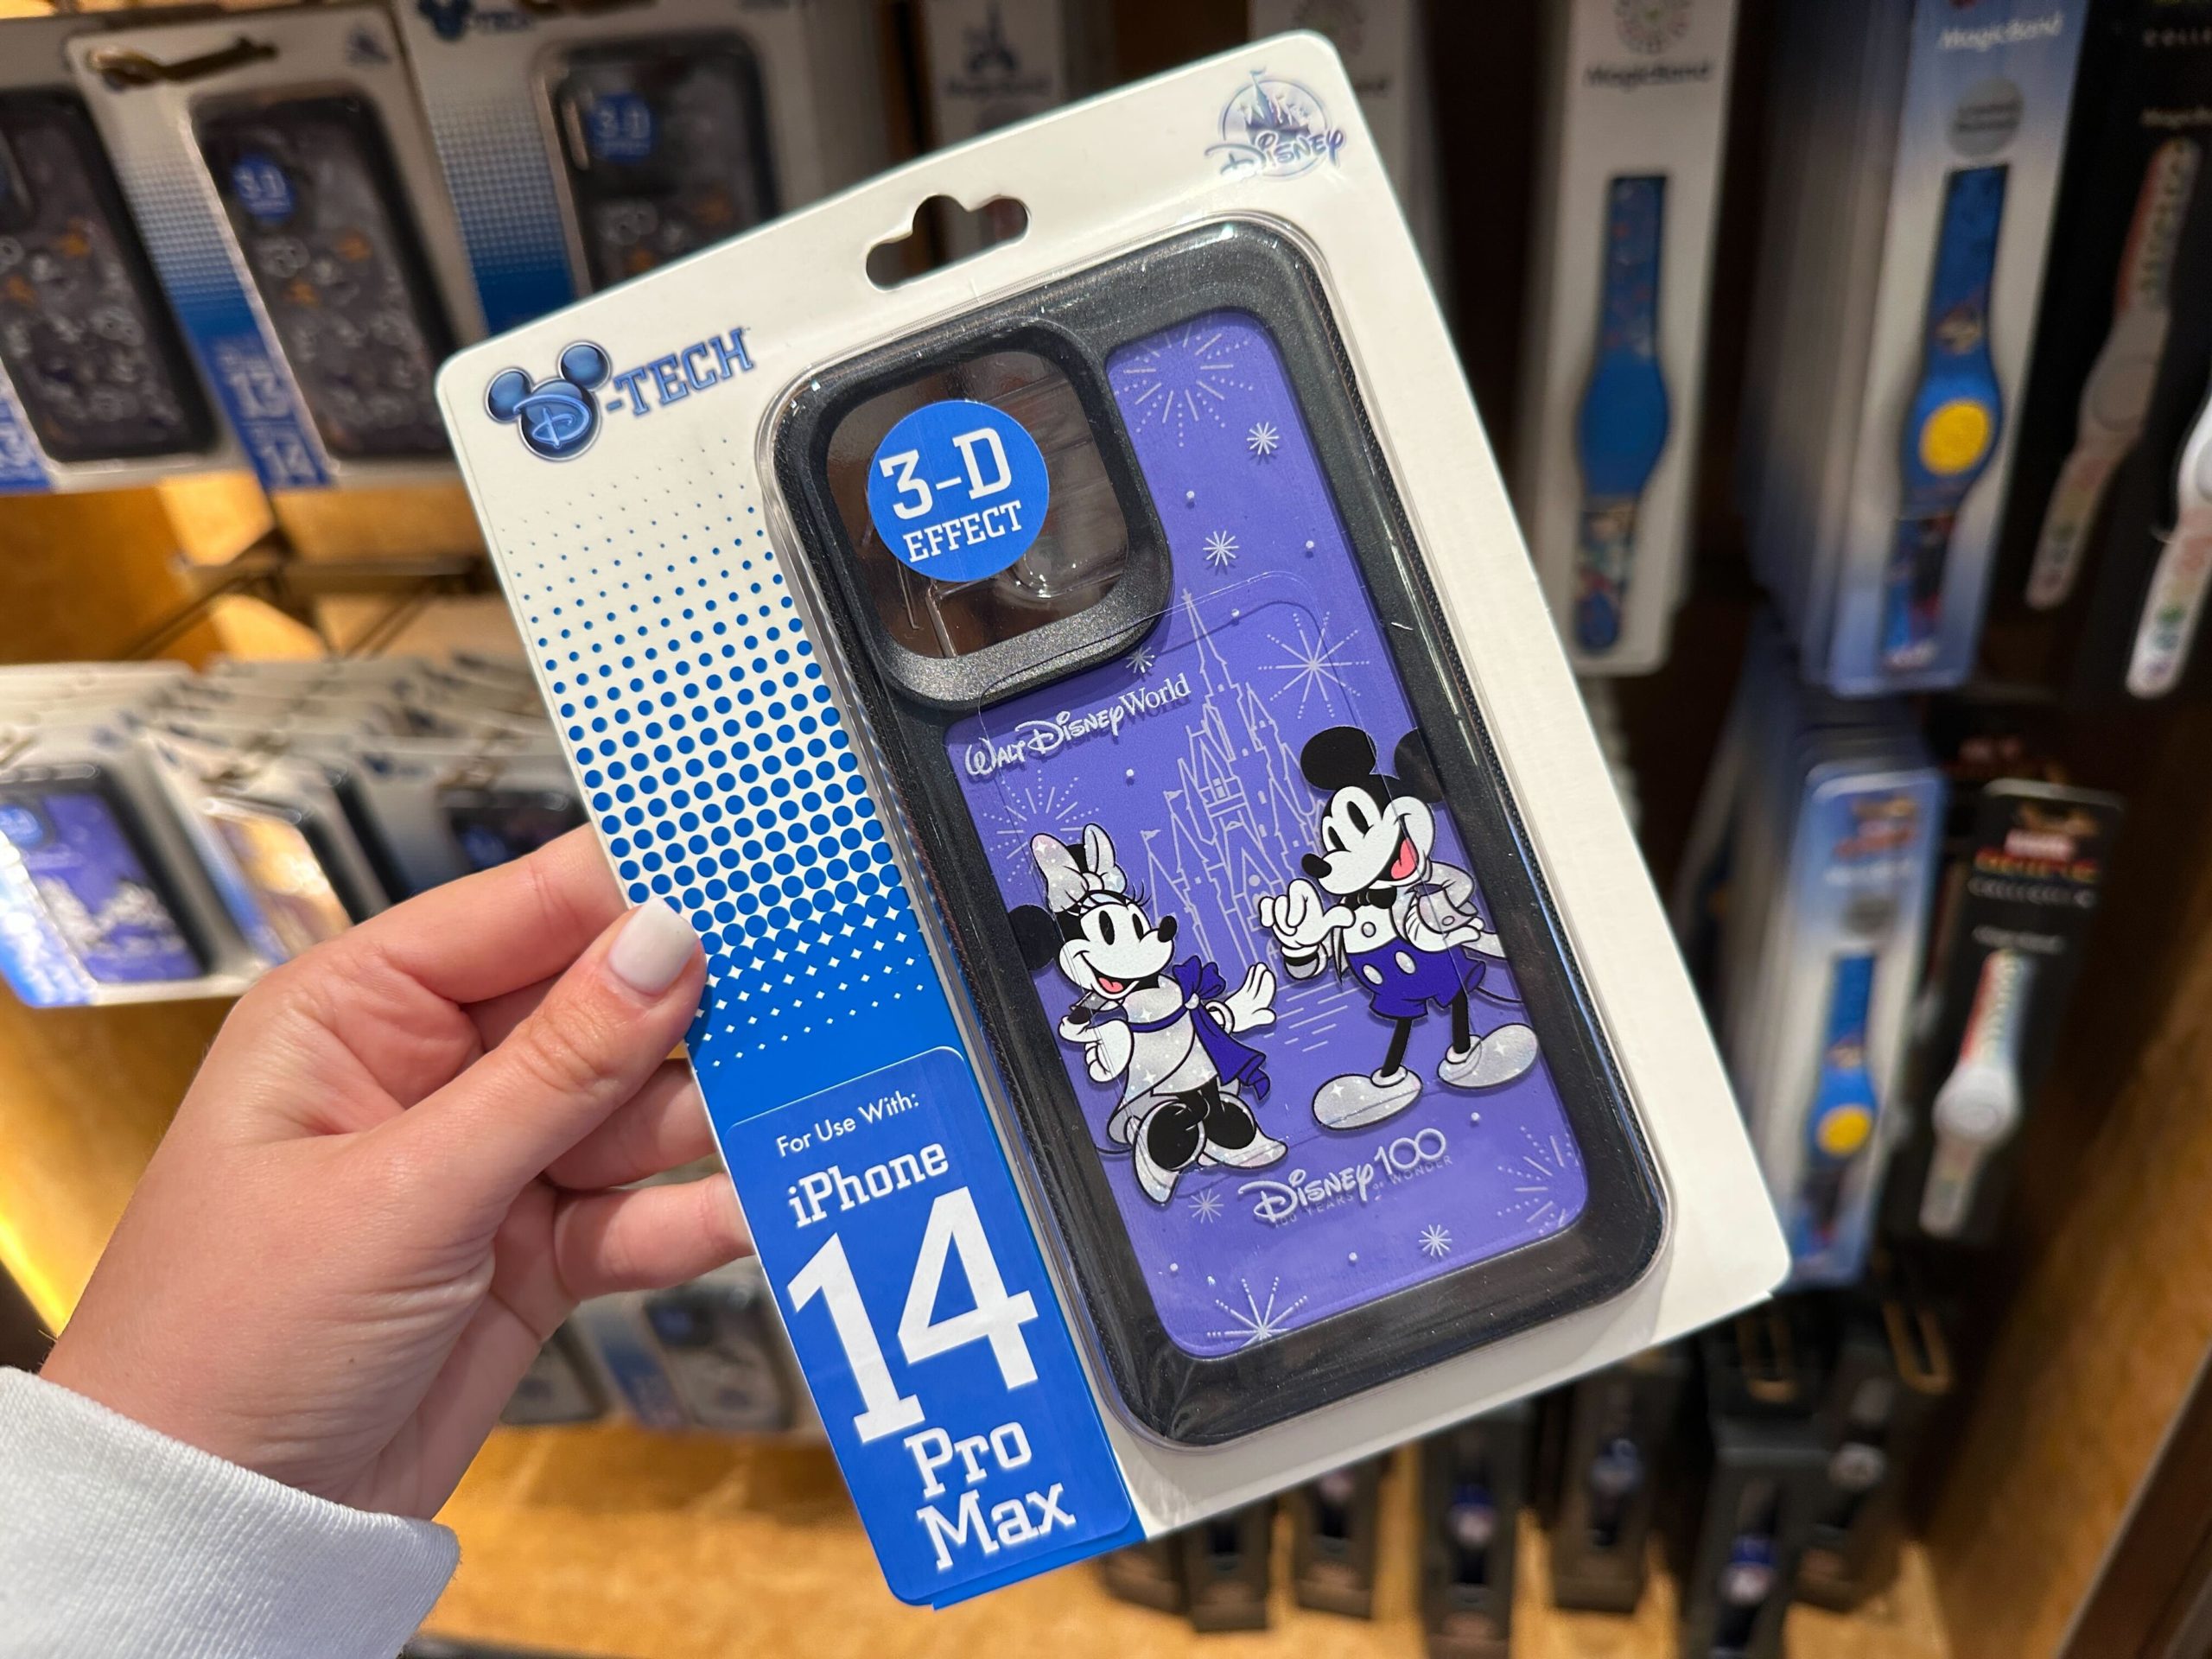 Disney100 Phone Cases Arrive at Disney World 